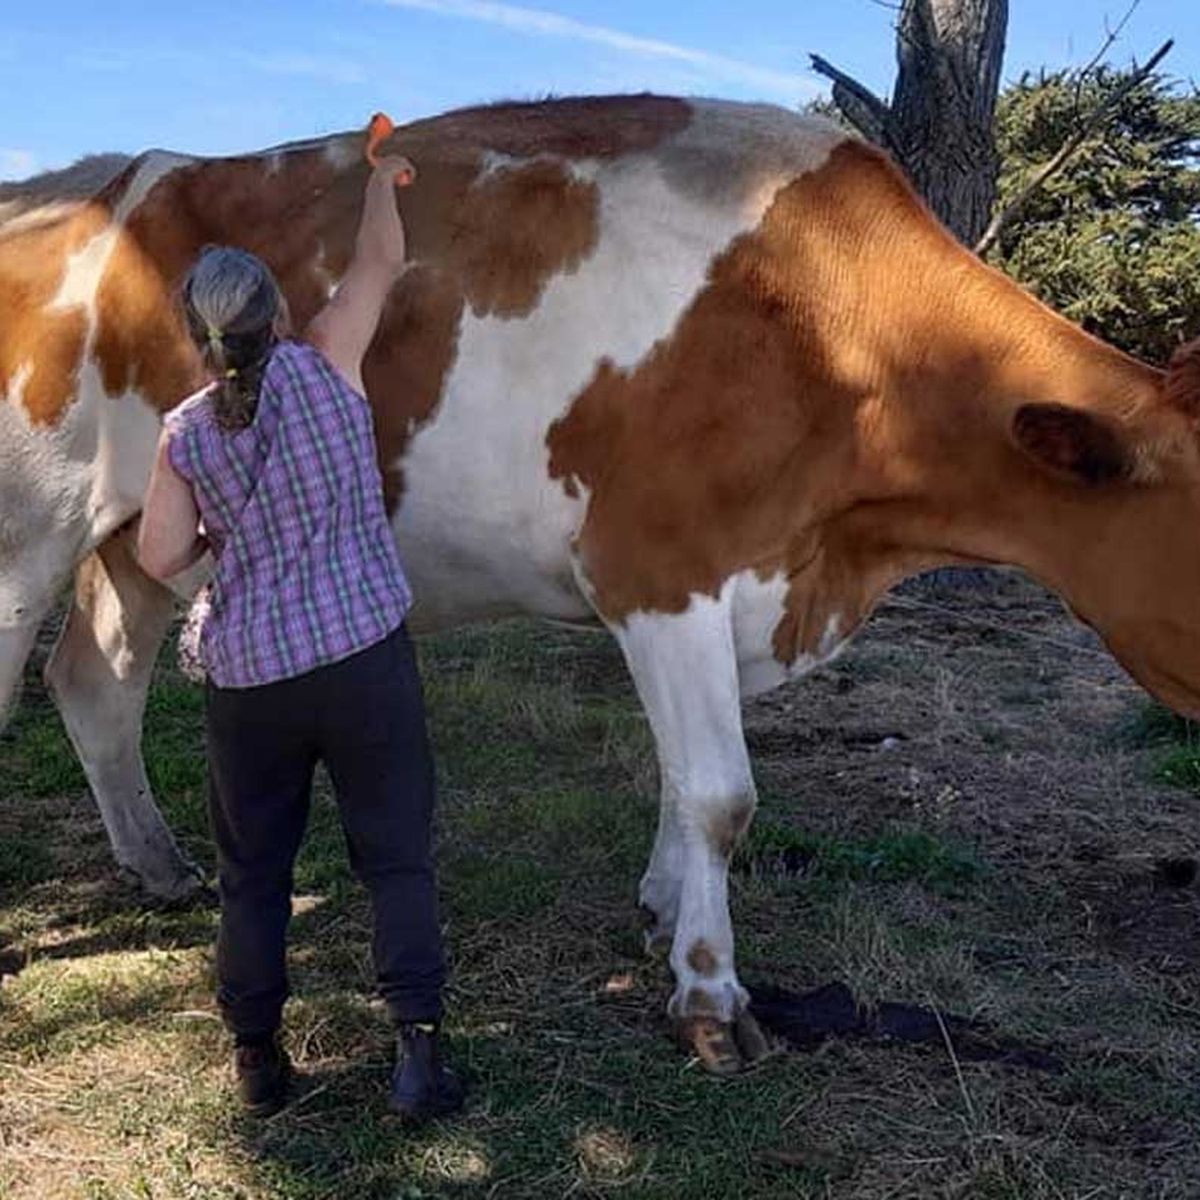 Big Moo, one of Australia's steers, dies after short illness